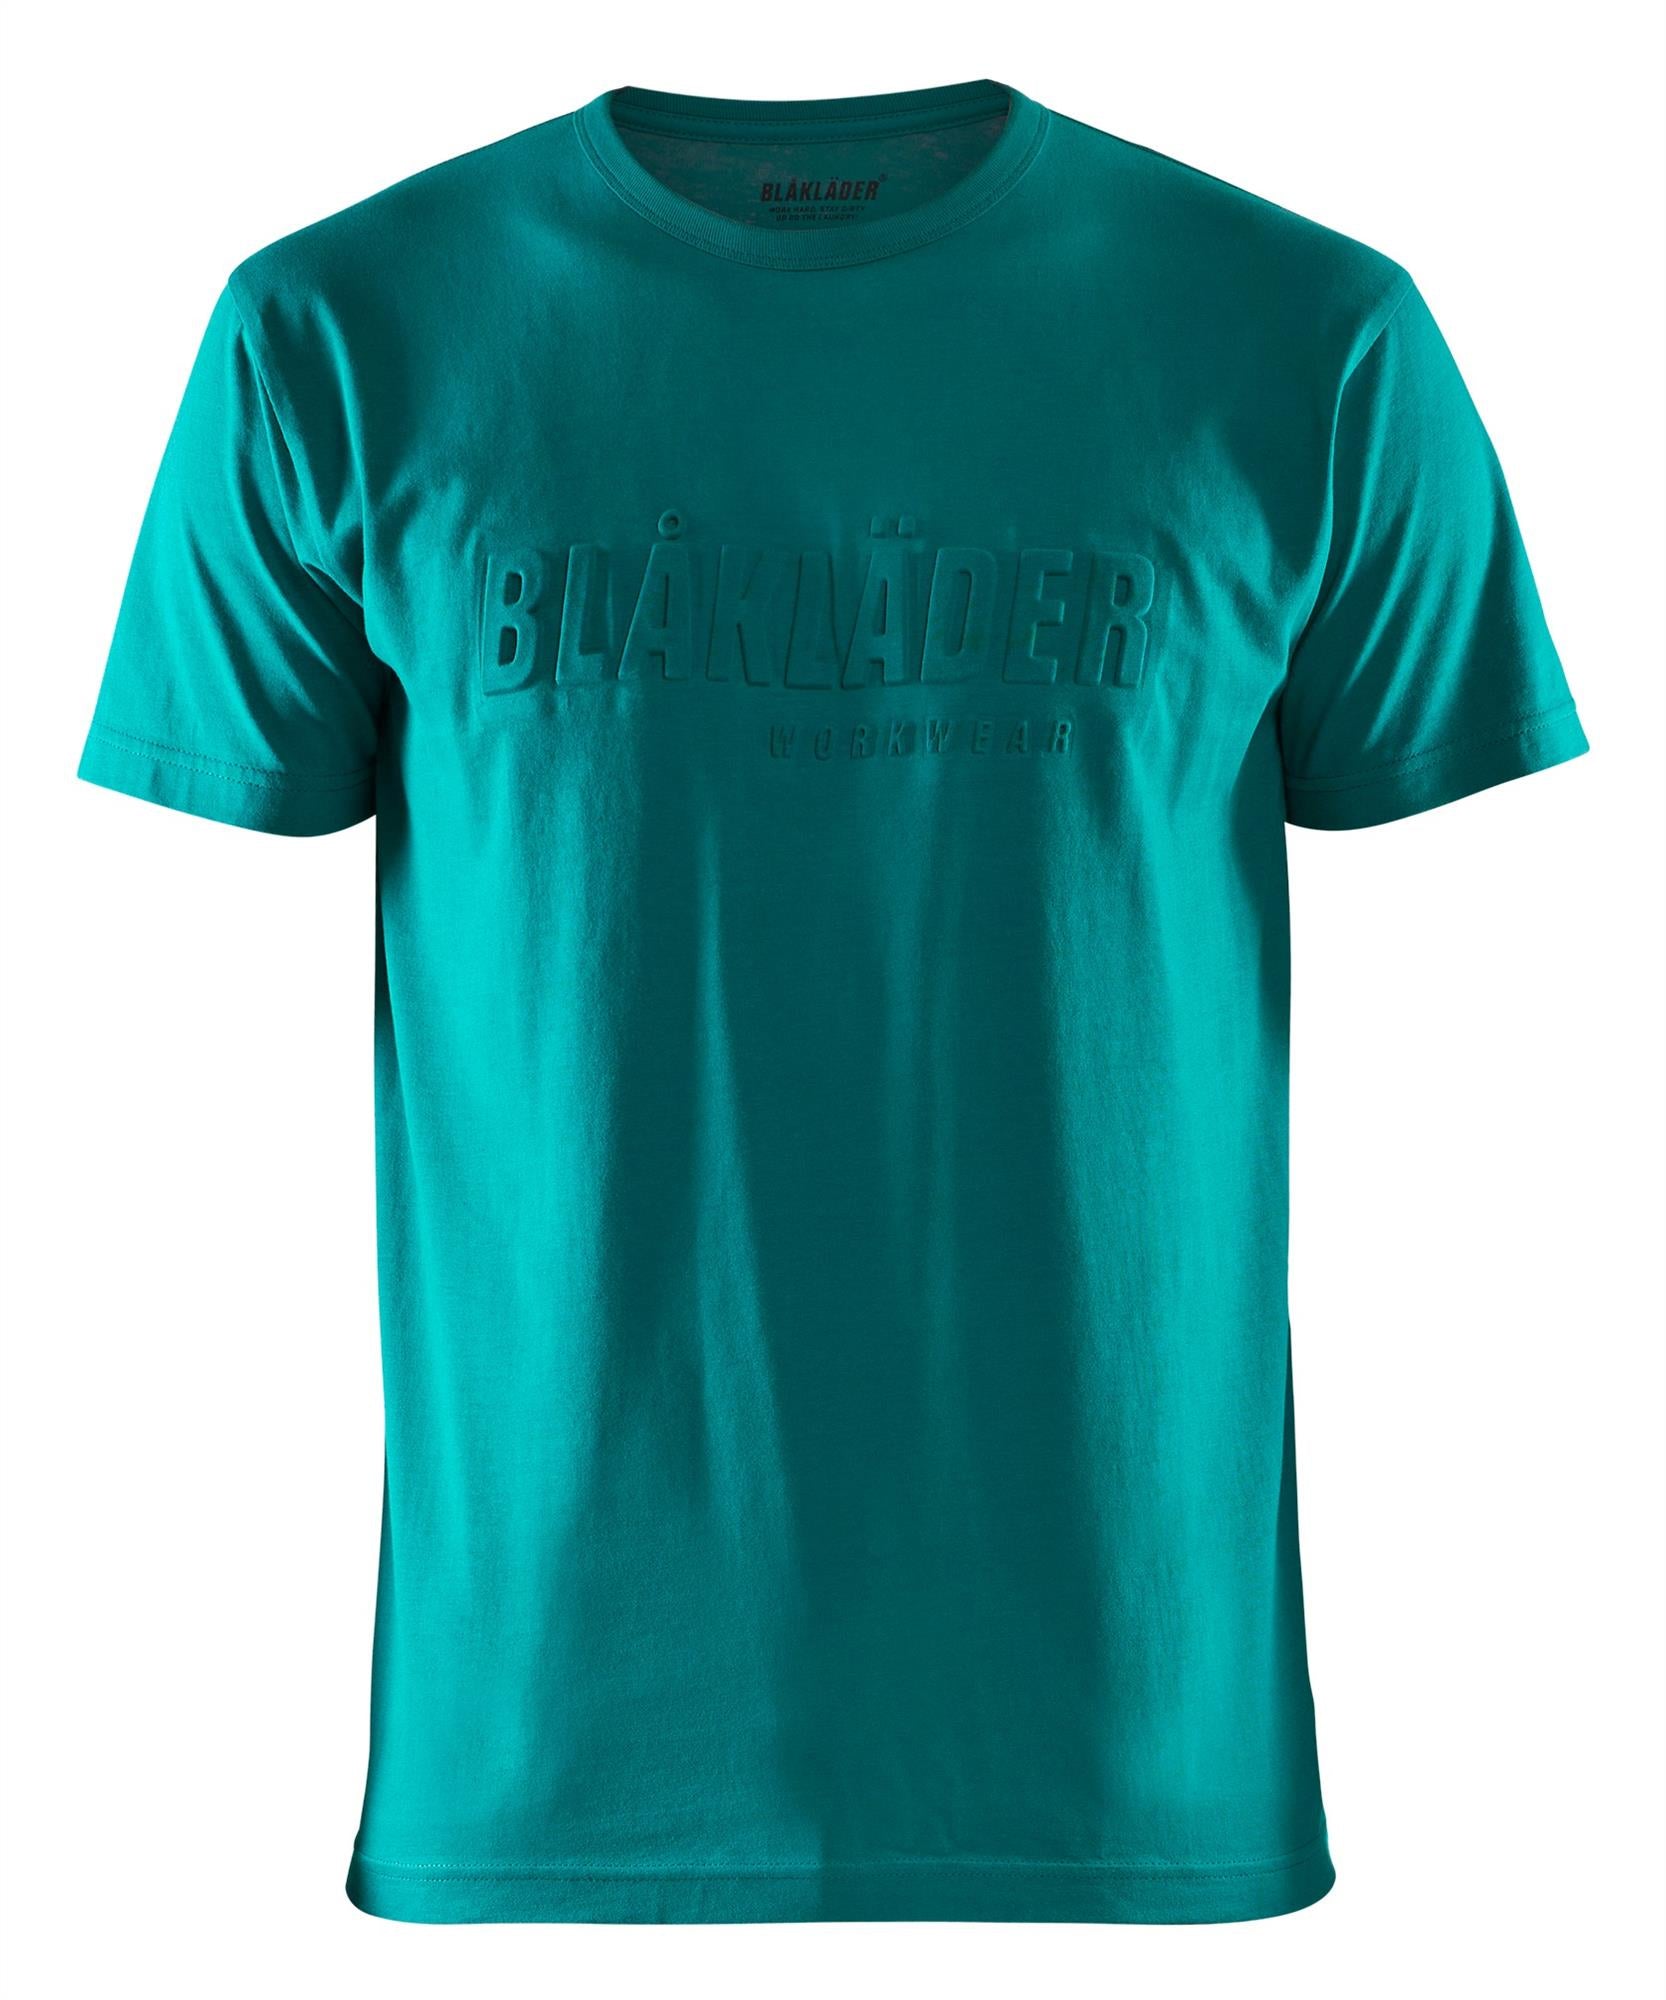 Blaklader 3D-logo teal men's cotton short-sleeve T-shirt #3531